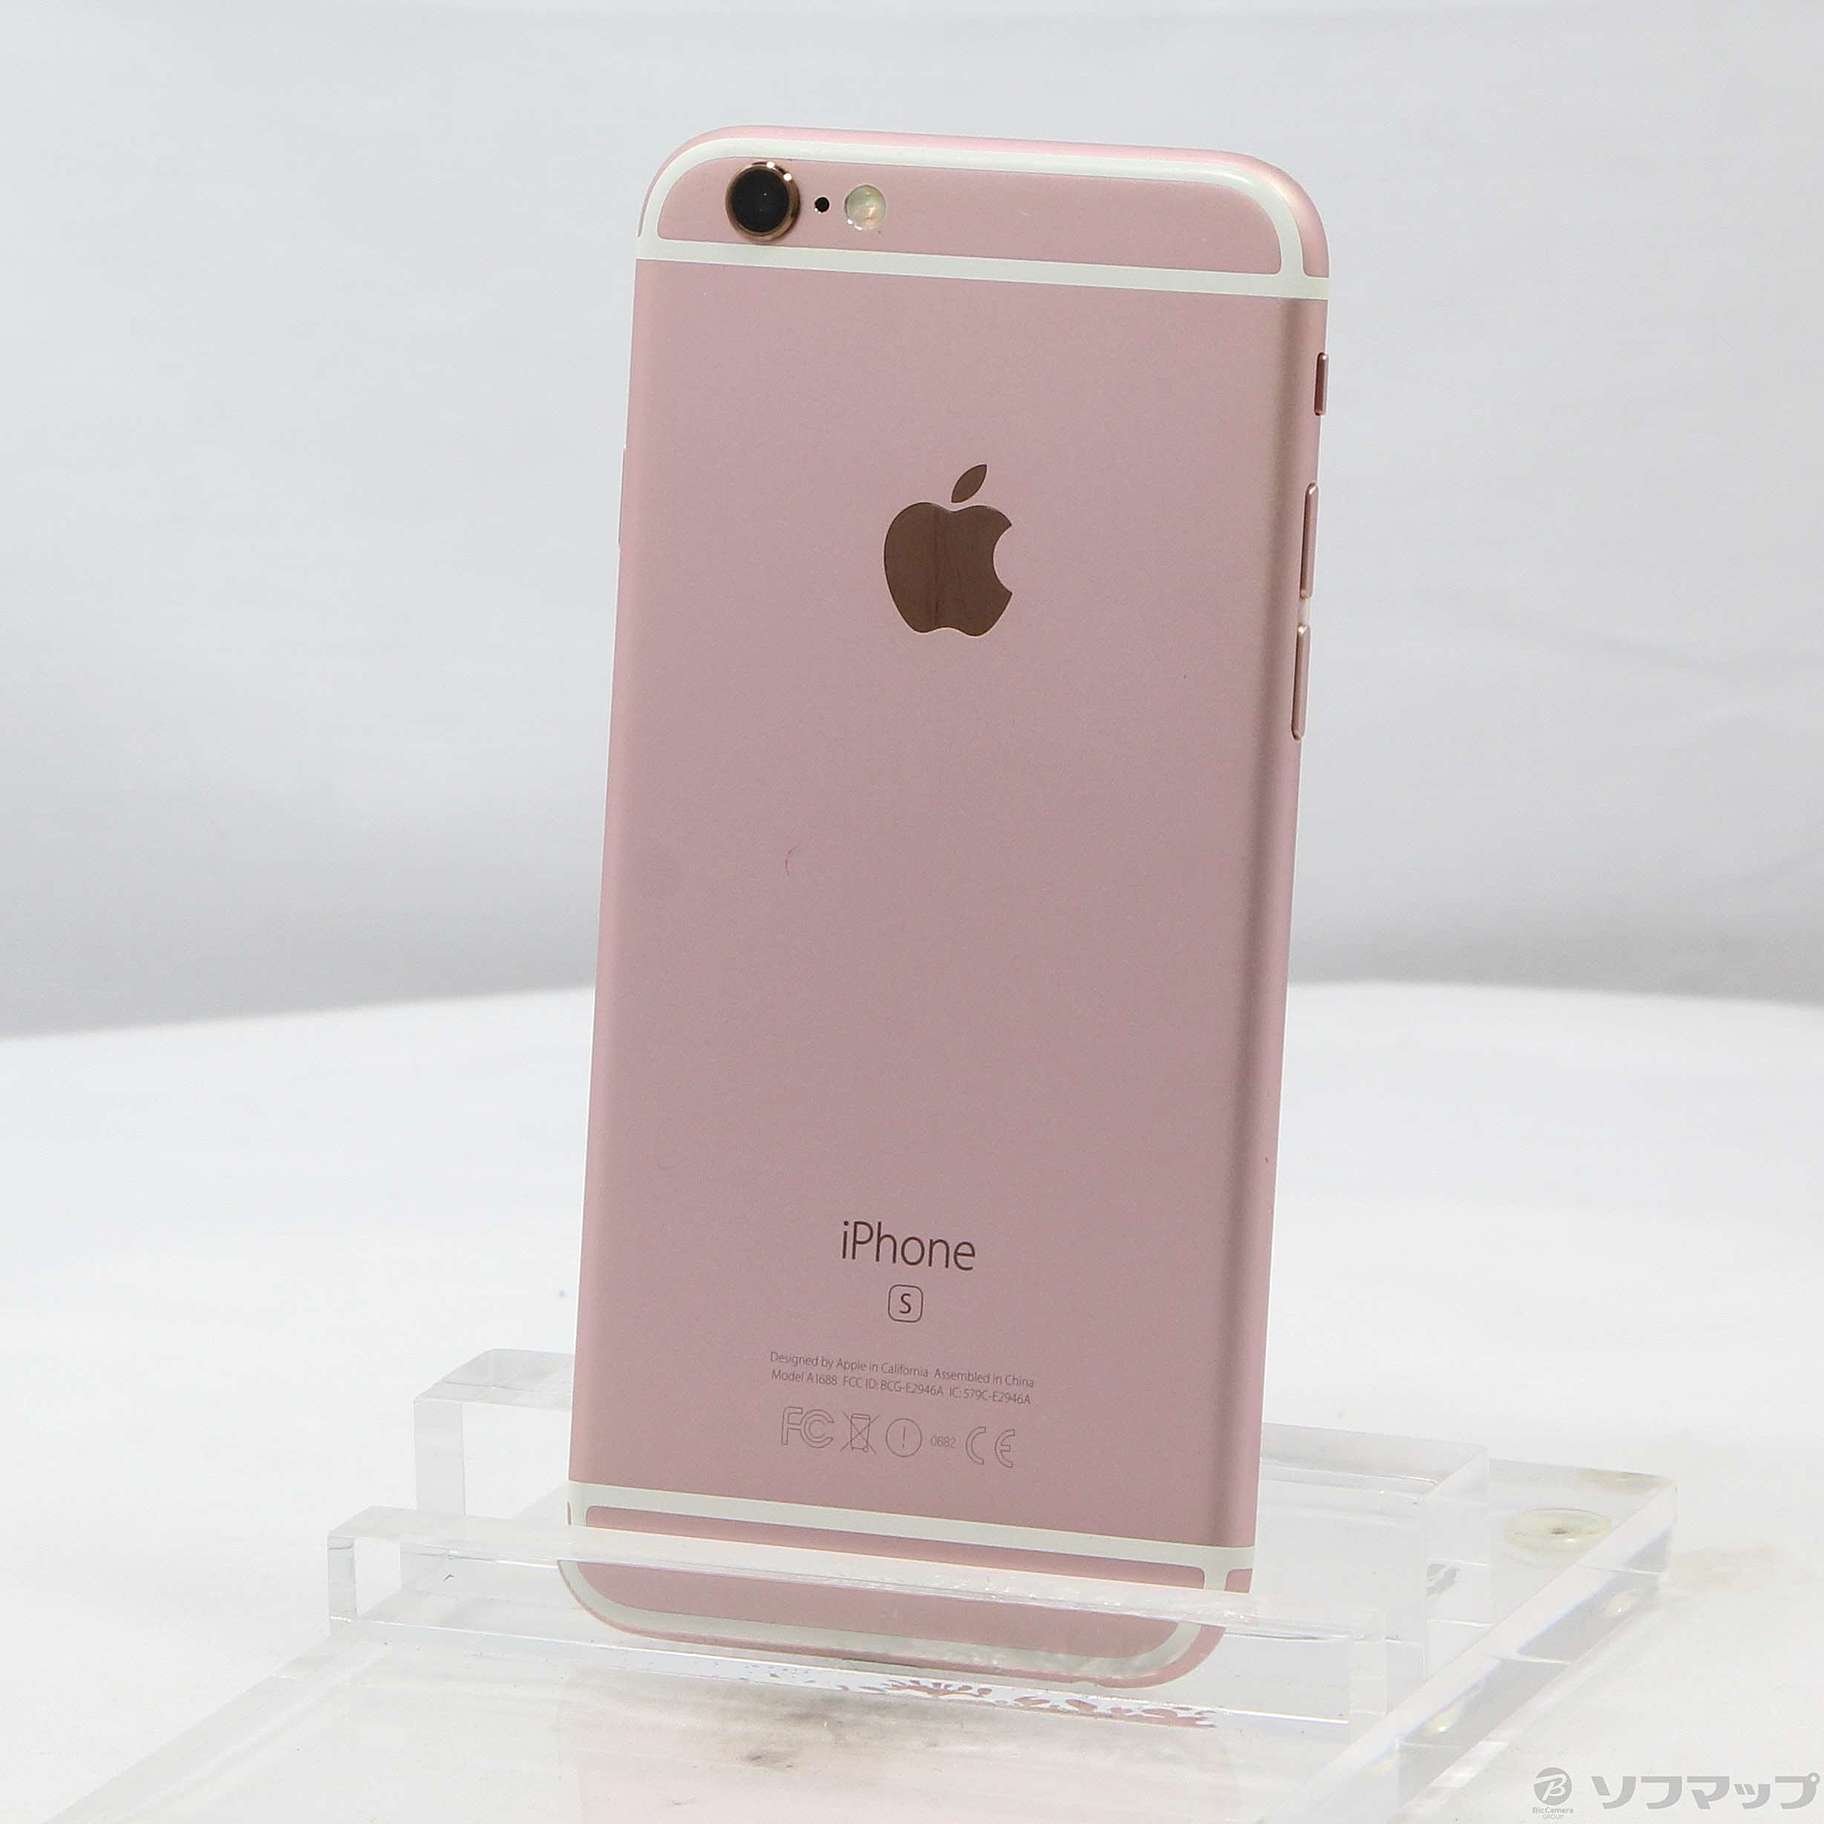 iPhone6s rose gold 128gb simフリー | munchercruncher.com